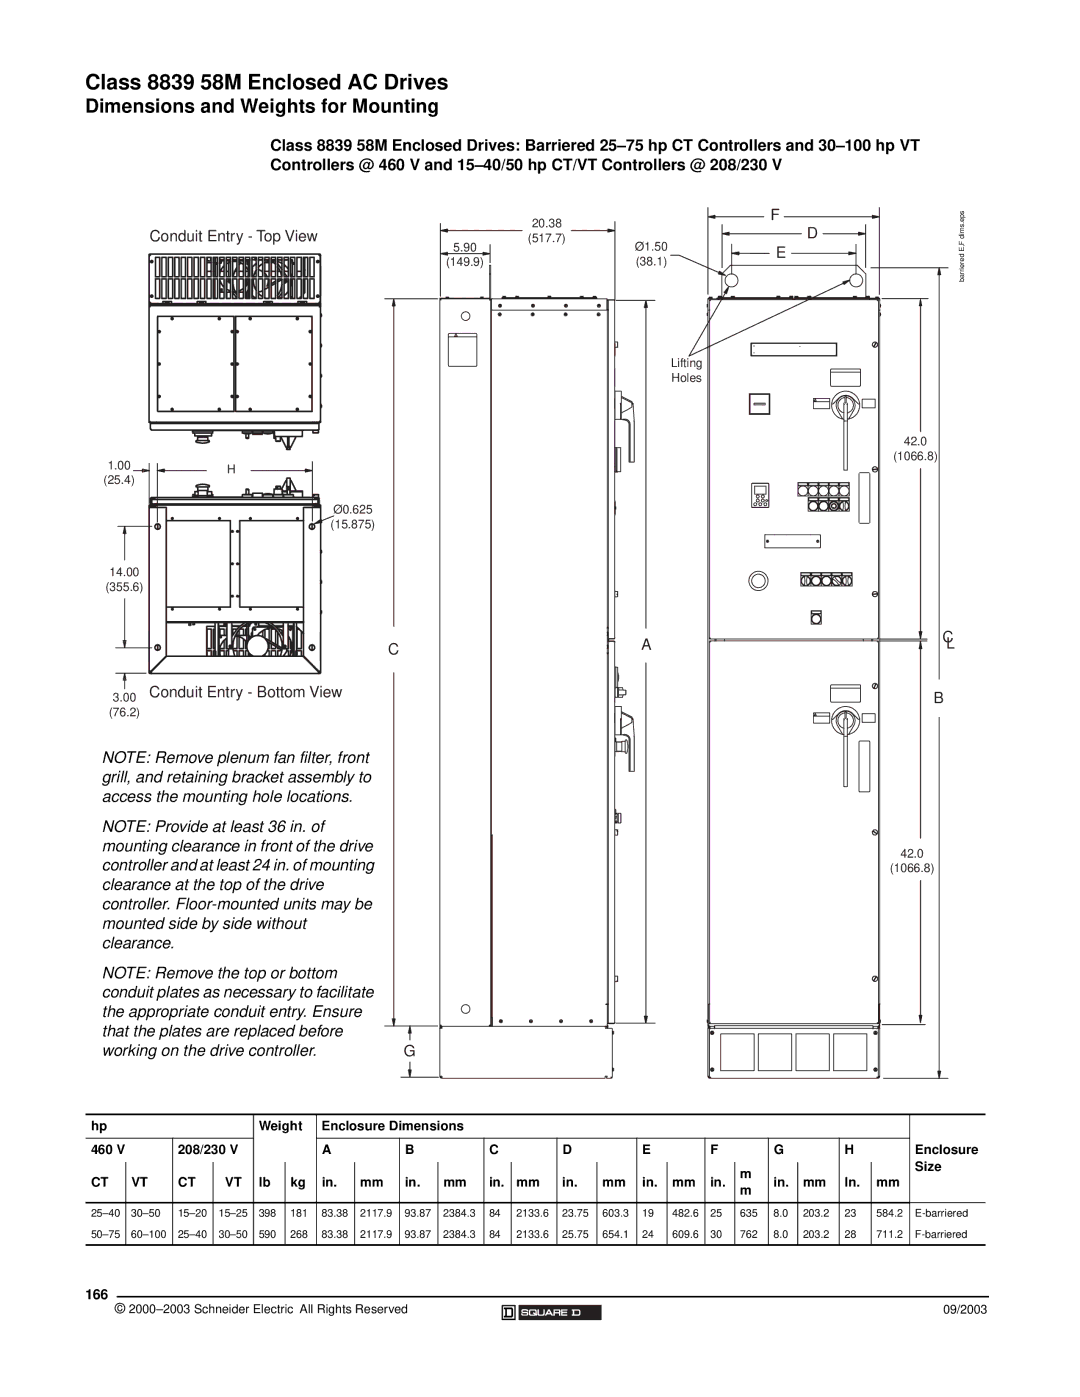 Schneider Electric 58 TRX manual 166, 208/230 Enclosure Size 